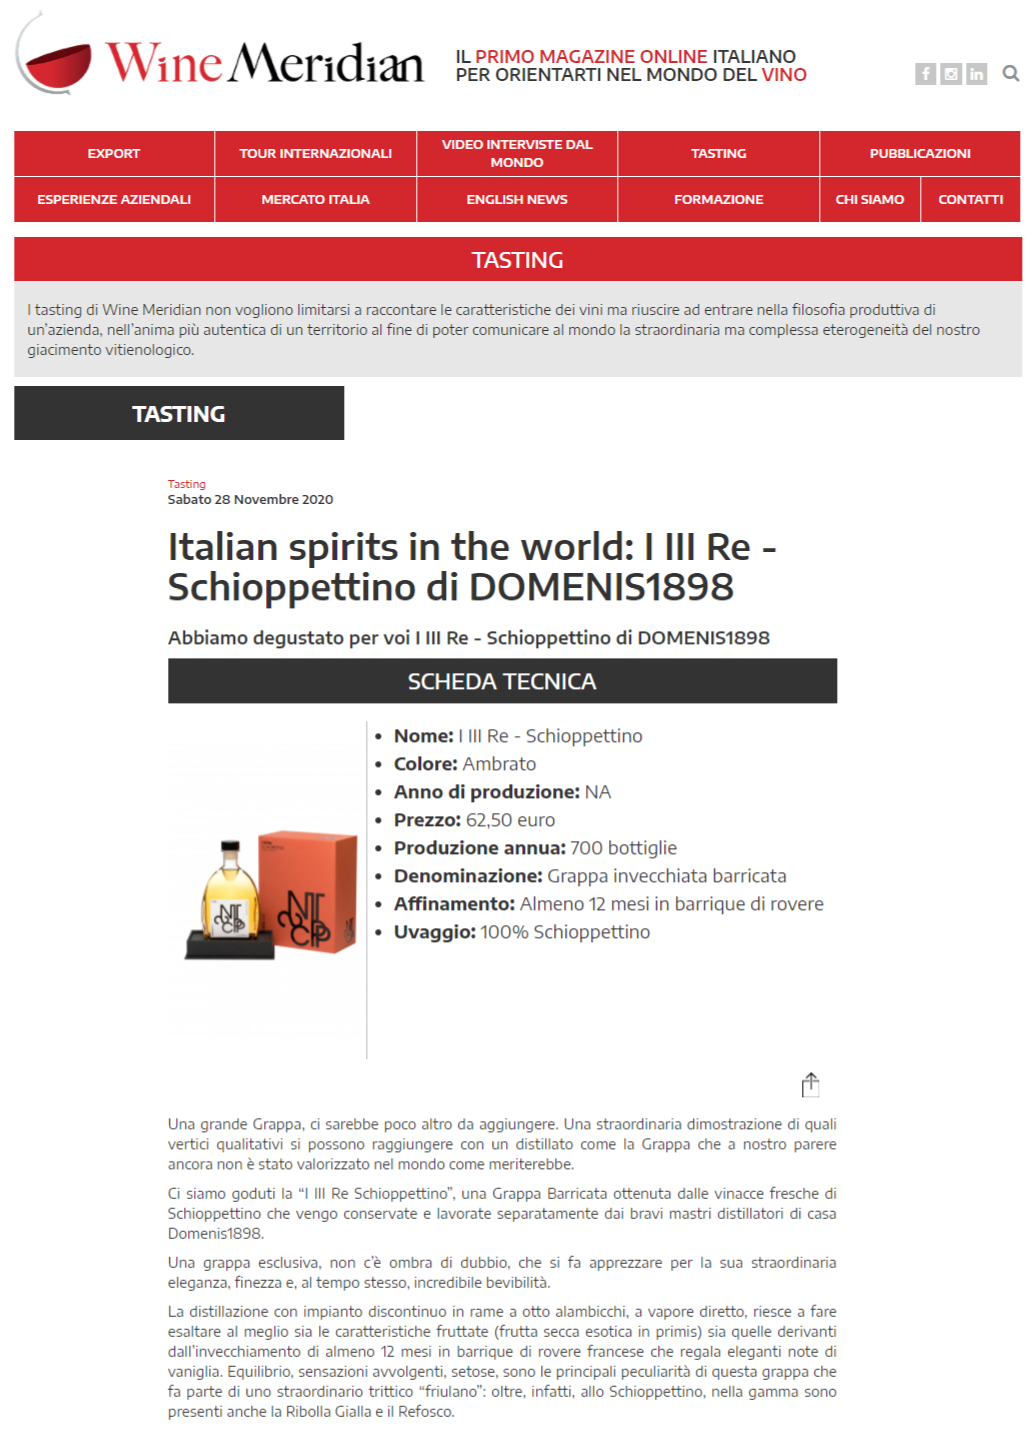 2020 novembre 28: WineMeridian – Italian spirits in the world: I III Re – Schioppettino